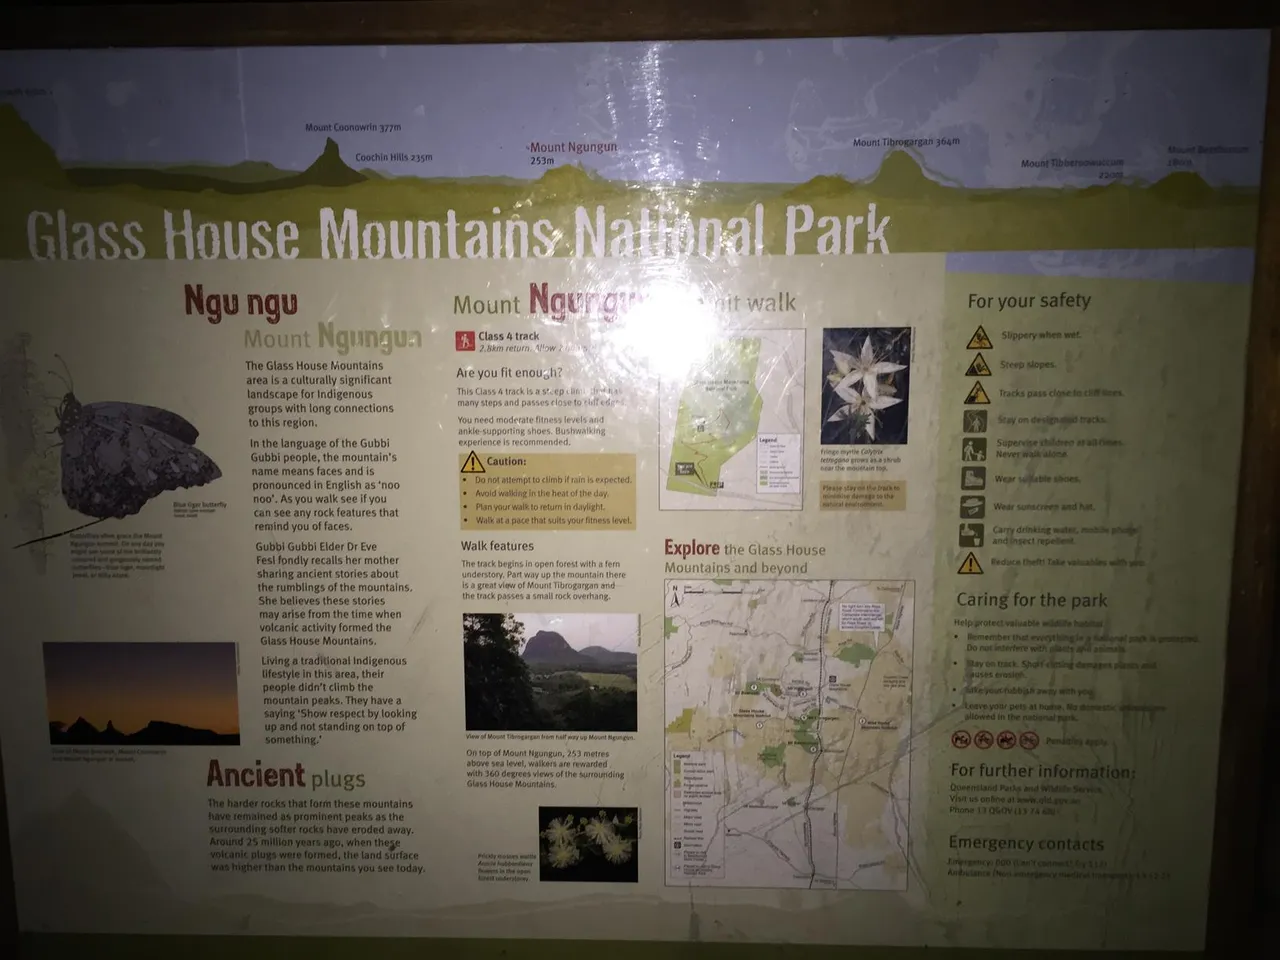 Glass House Mountains National Park: Mt. Ngungun Summit 